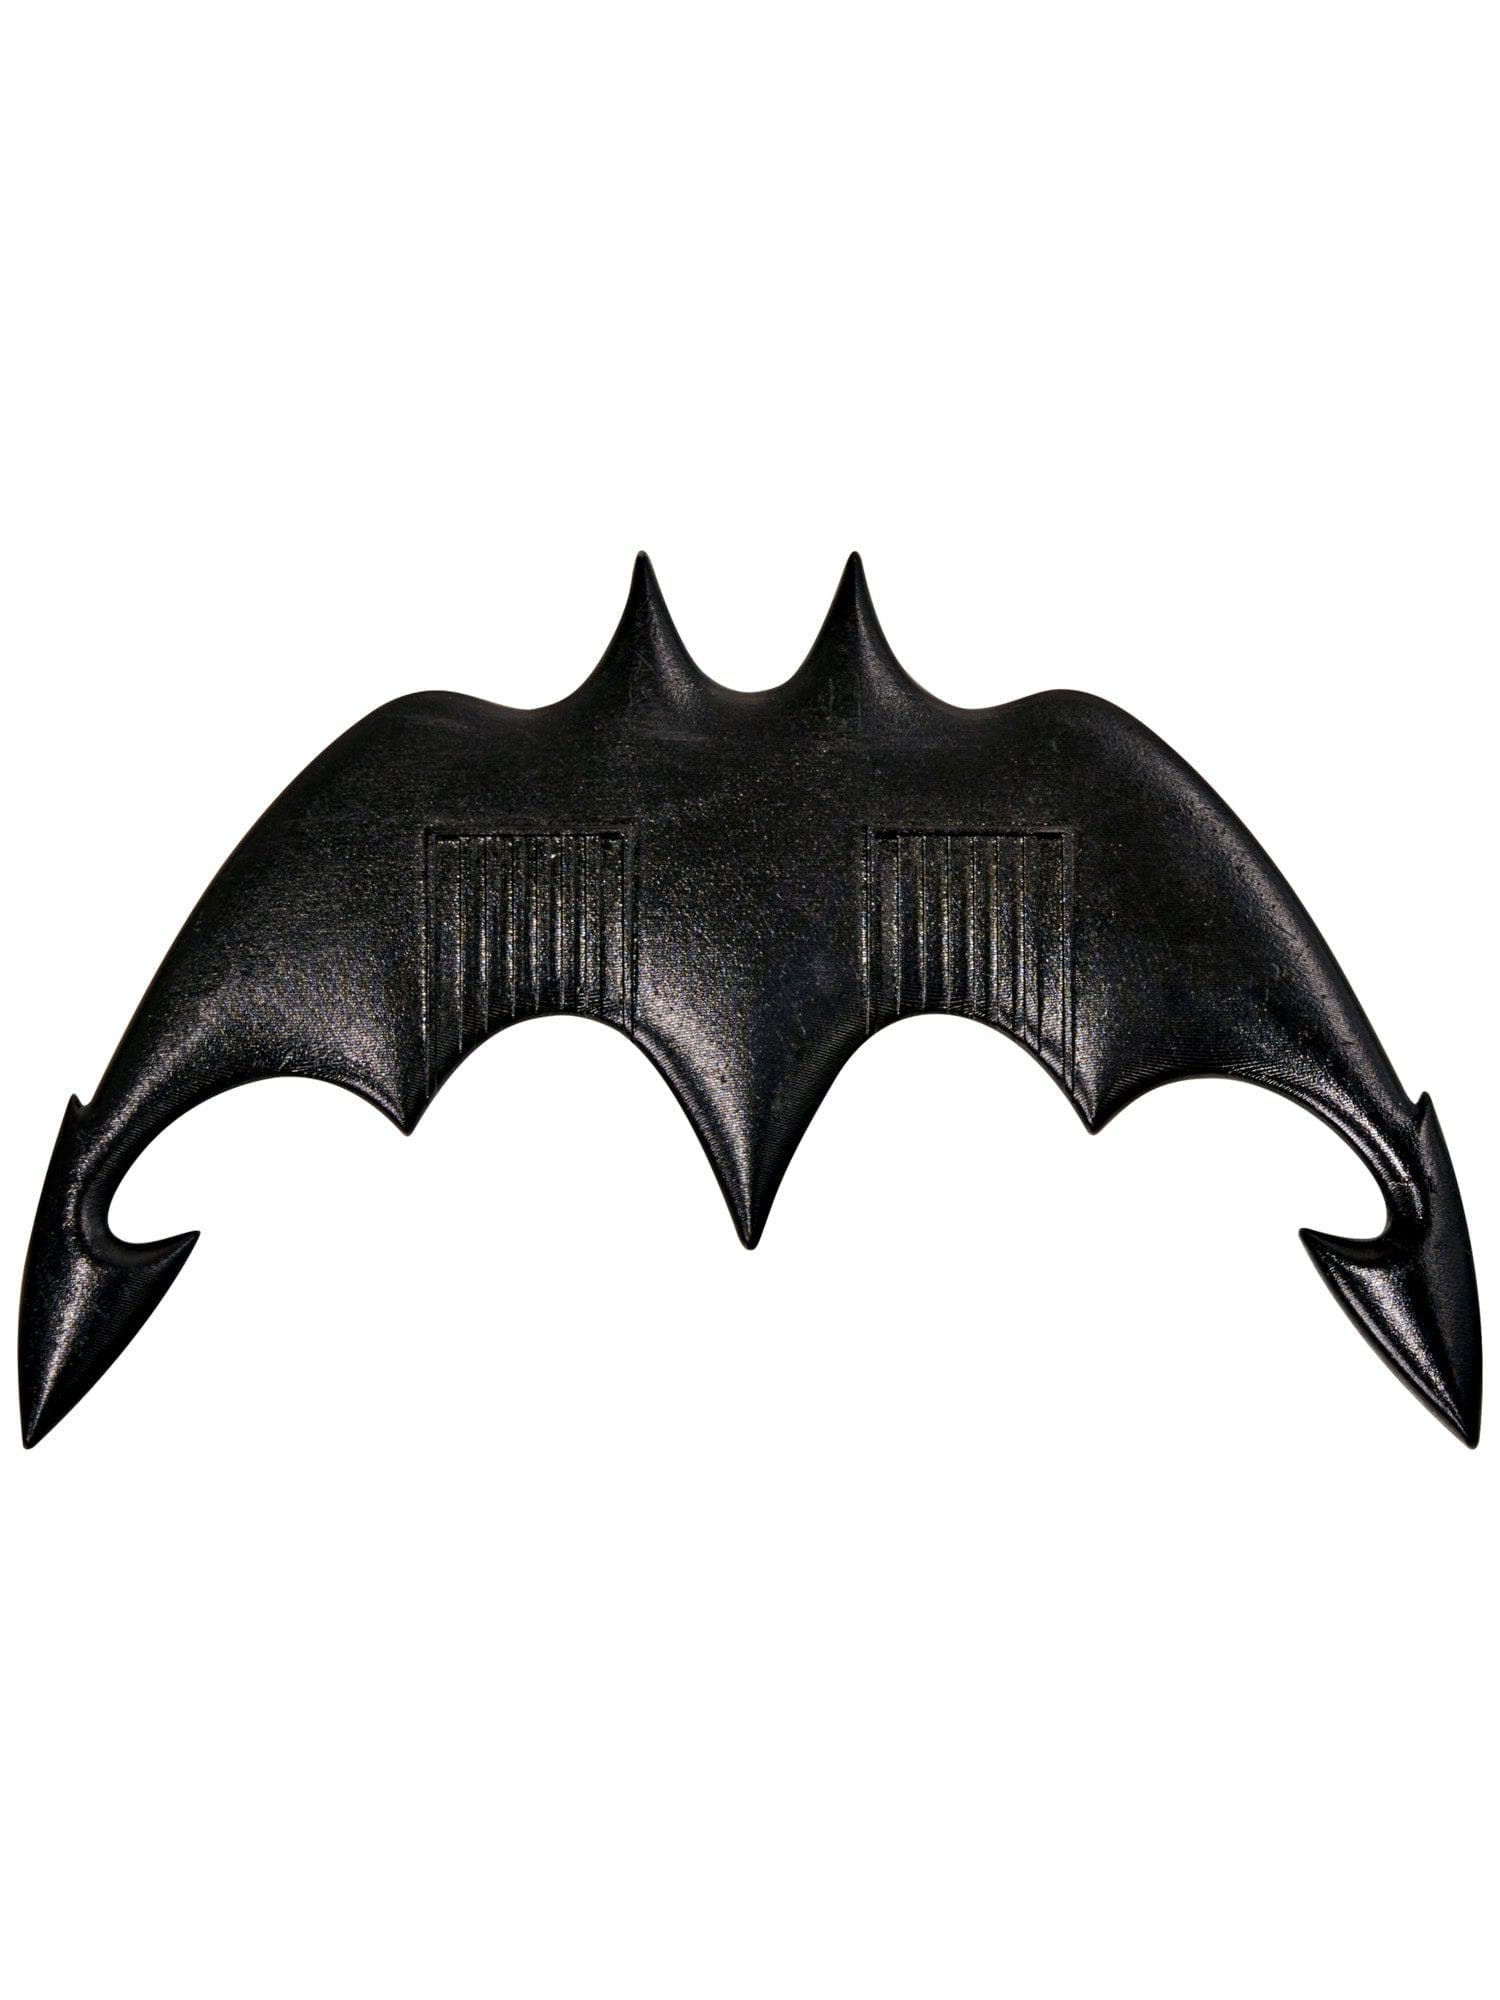 The Flash Batman Batarangs - costumes.com